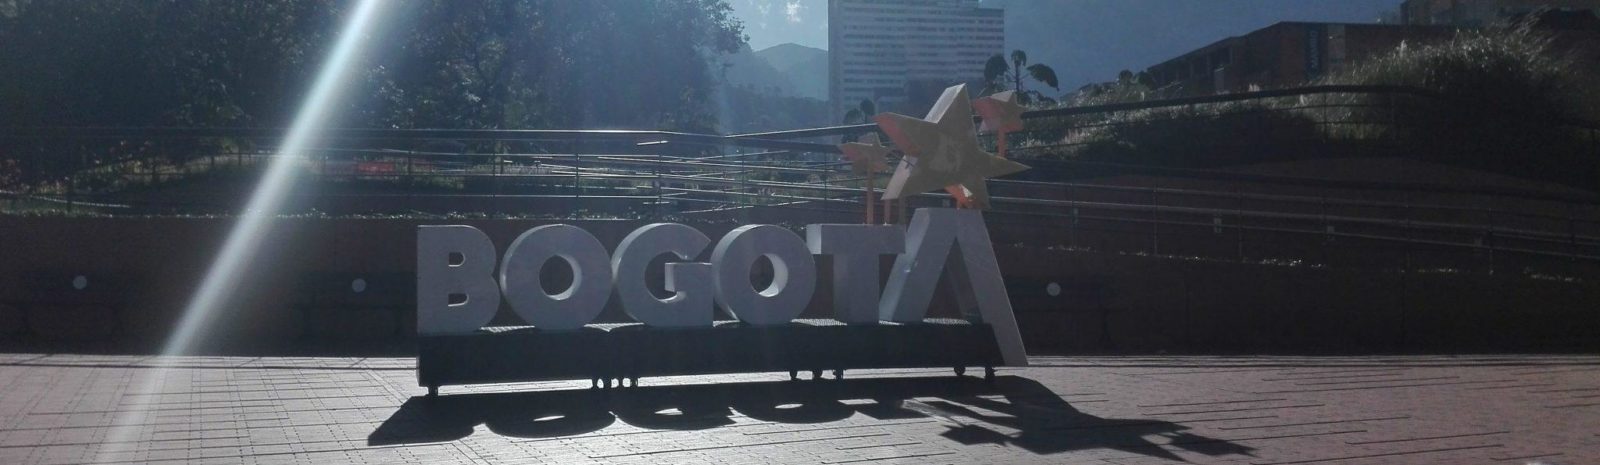 The 6 Best Tours in Bogota